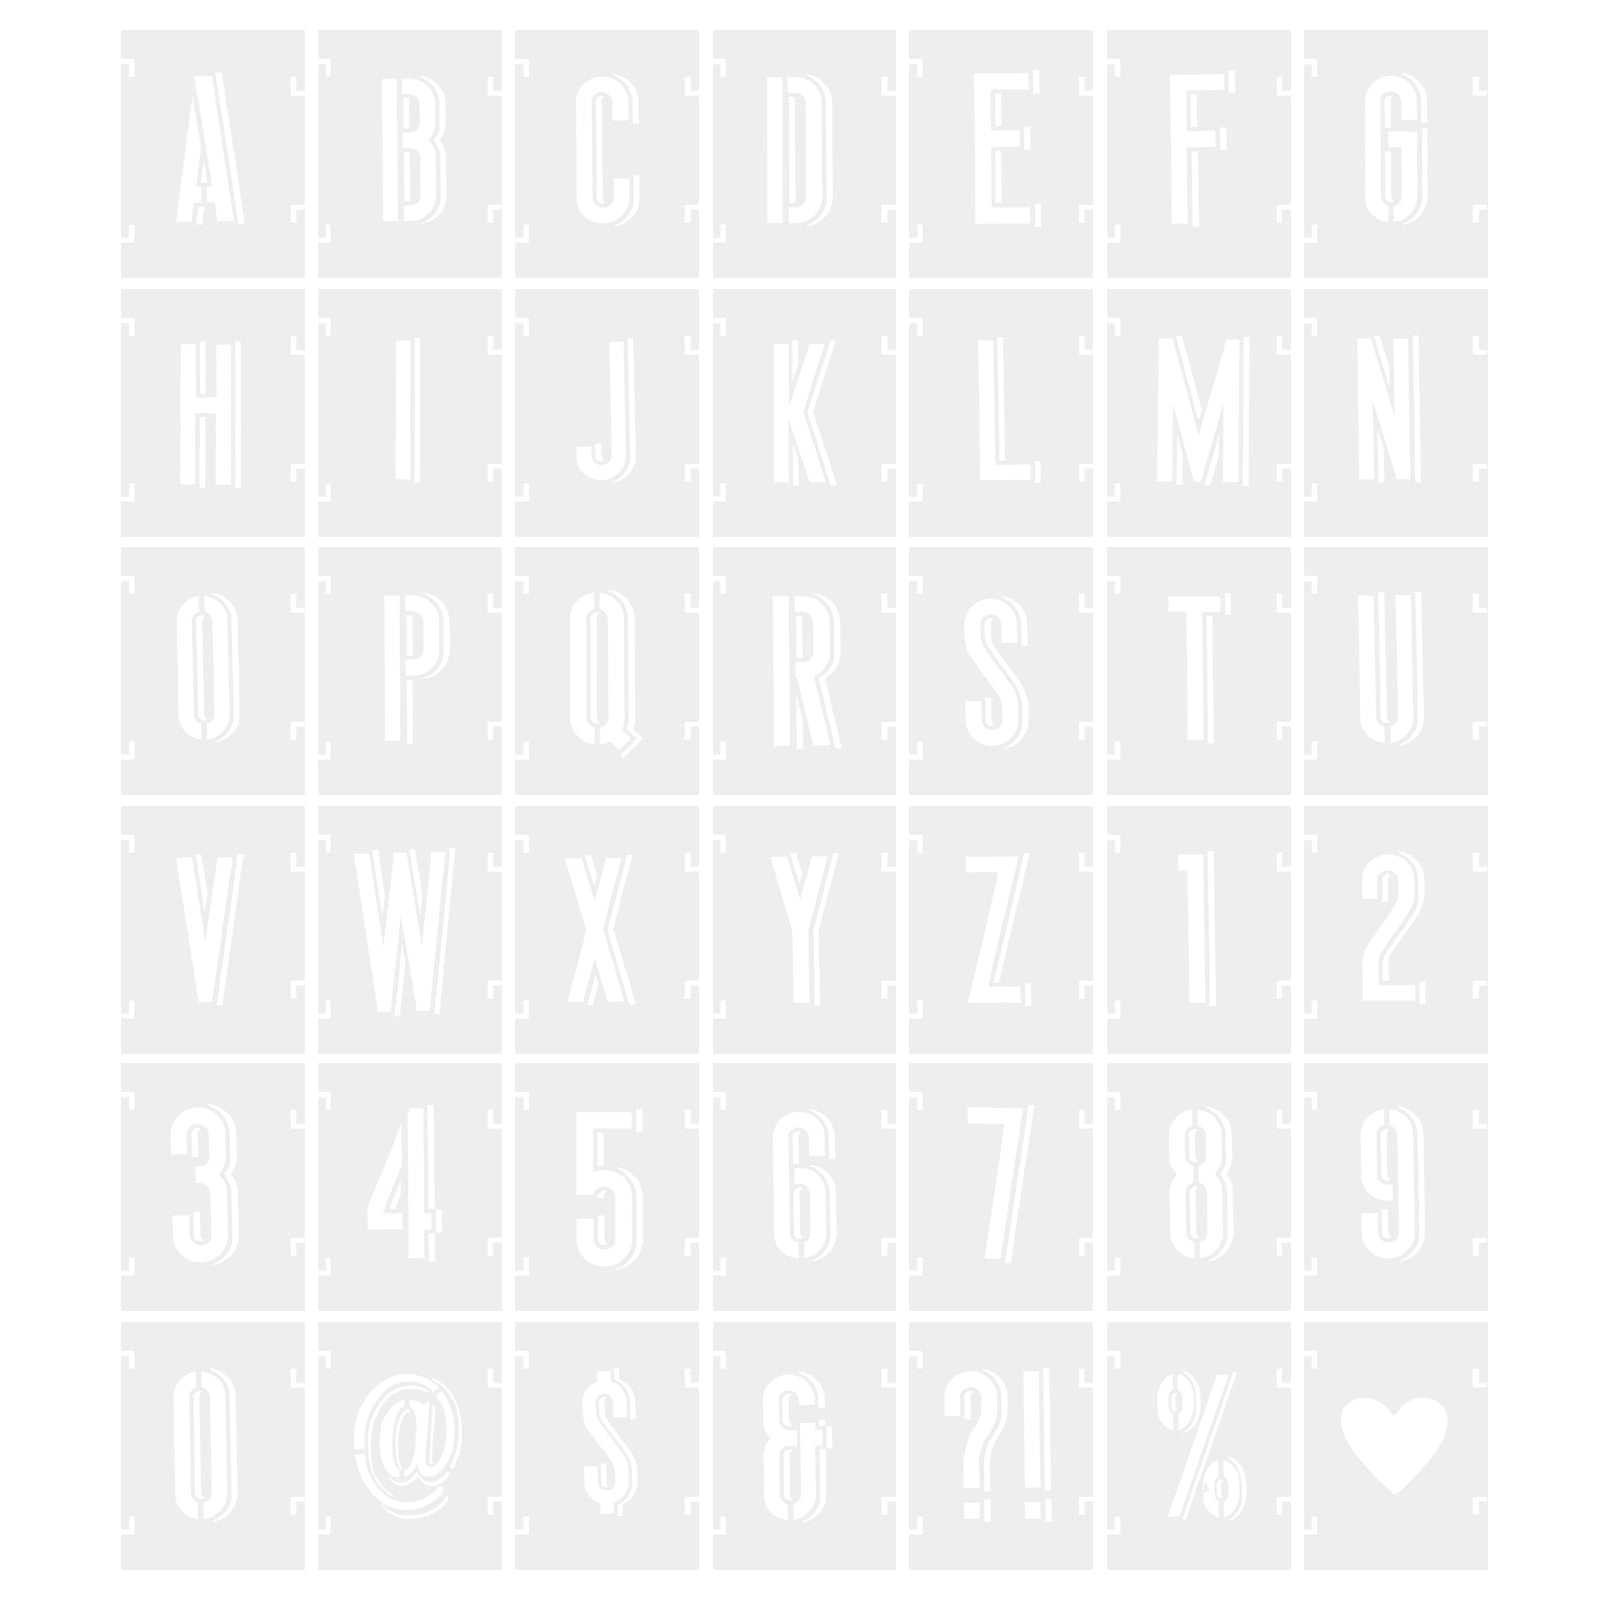 Hvxrjkn 36pcs Alphabet Letter Stencils Reusable Plastic Letter Number Templates Alphabet Art Craft Stencils for ing on Wood Wall Fabric Rock